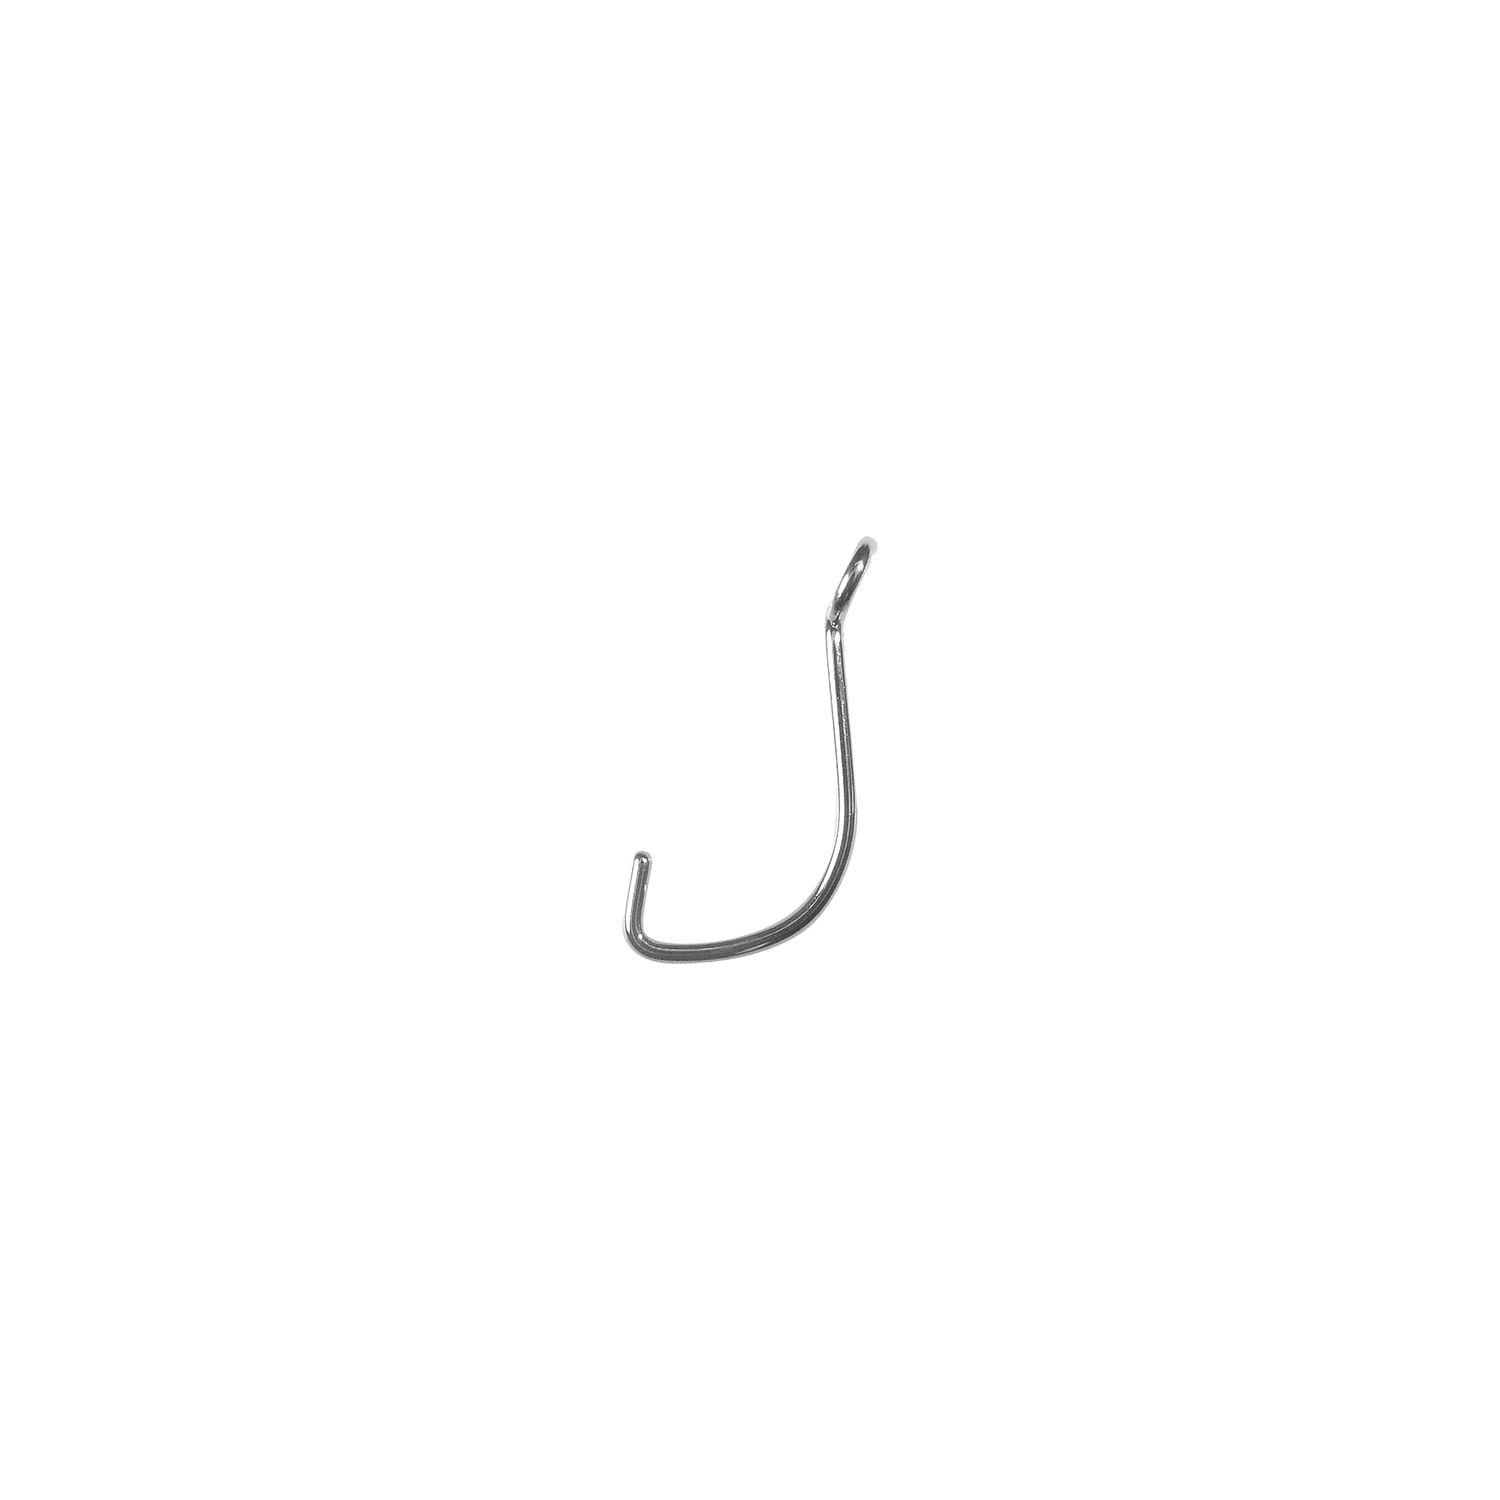 Retractor NAKAMURA Fish-Hook Type Medium One Pair, Surgical instruments